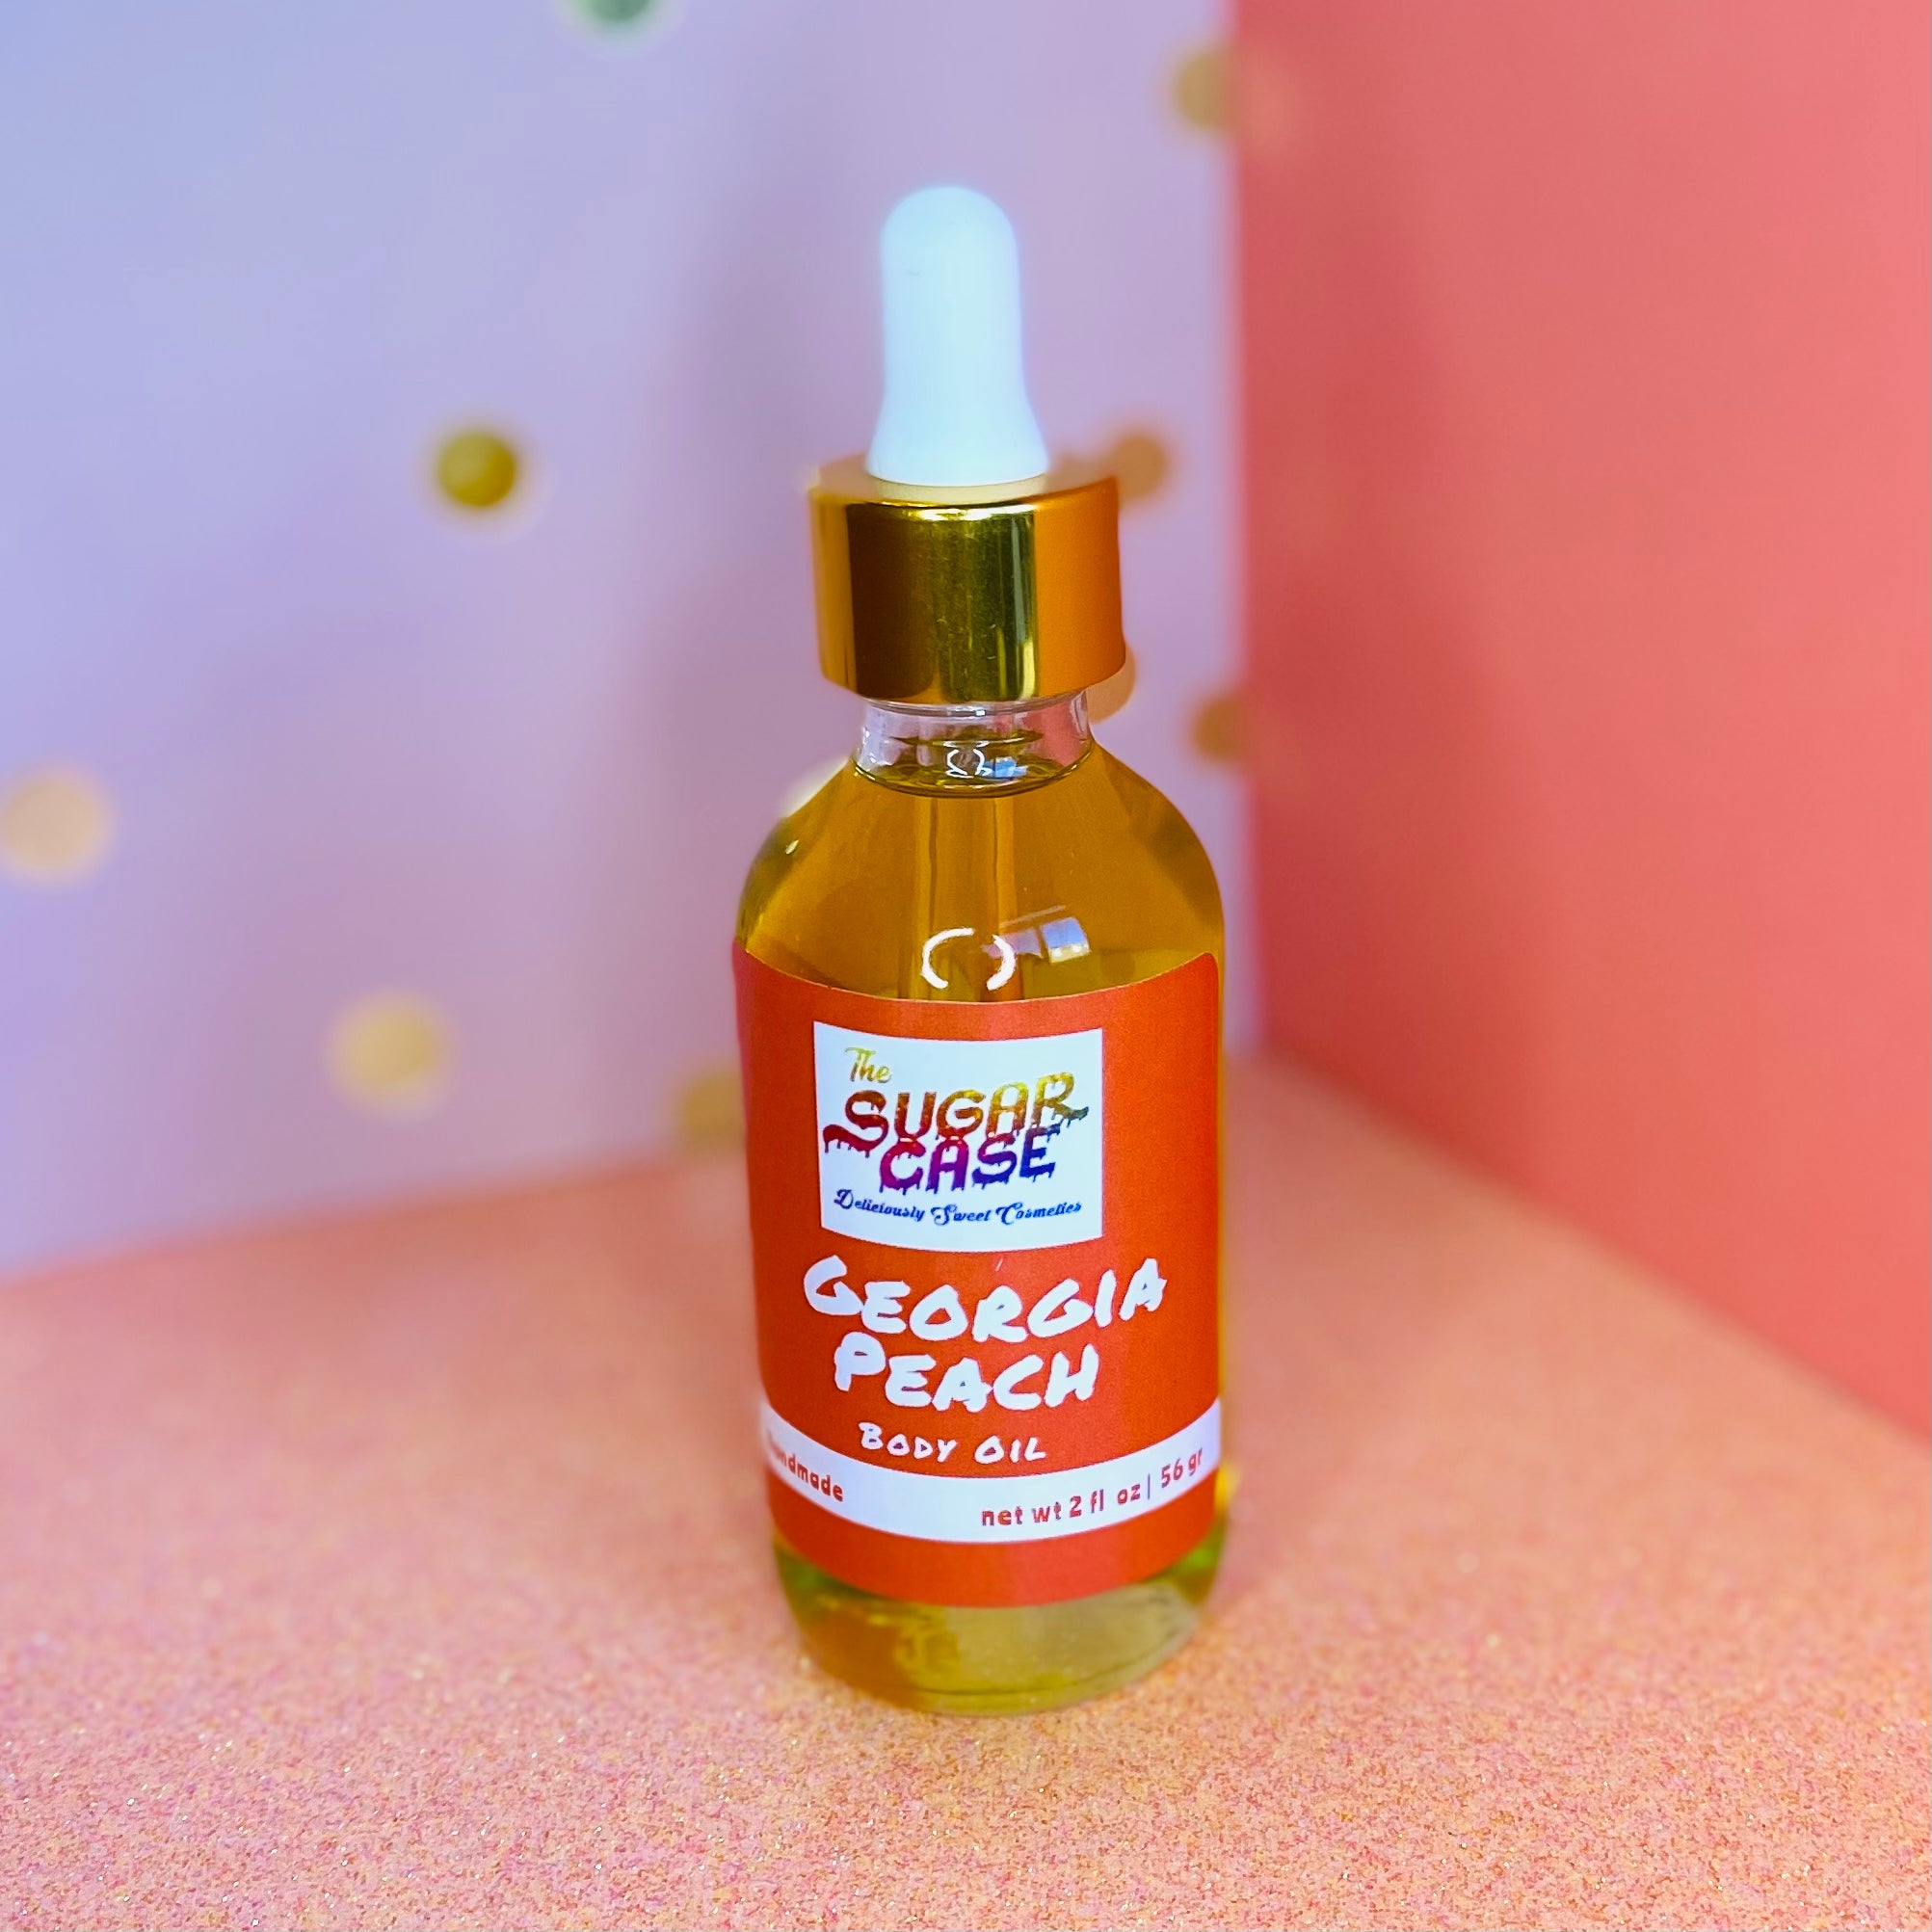 Georgia Peach Body Oil – The Sugar Case